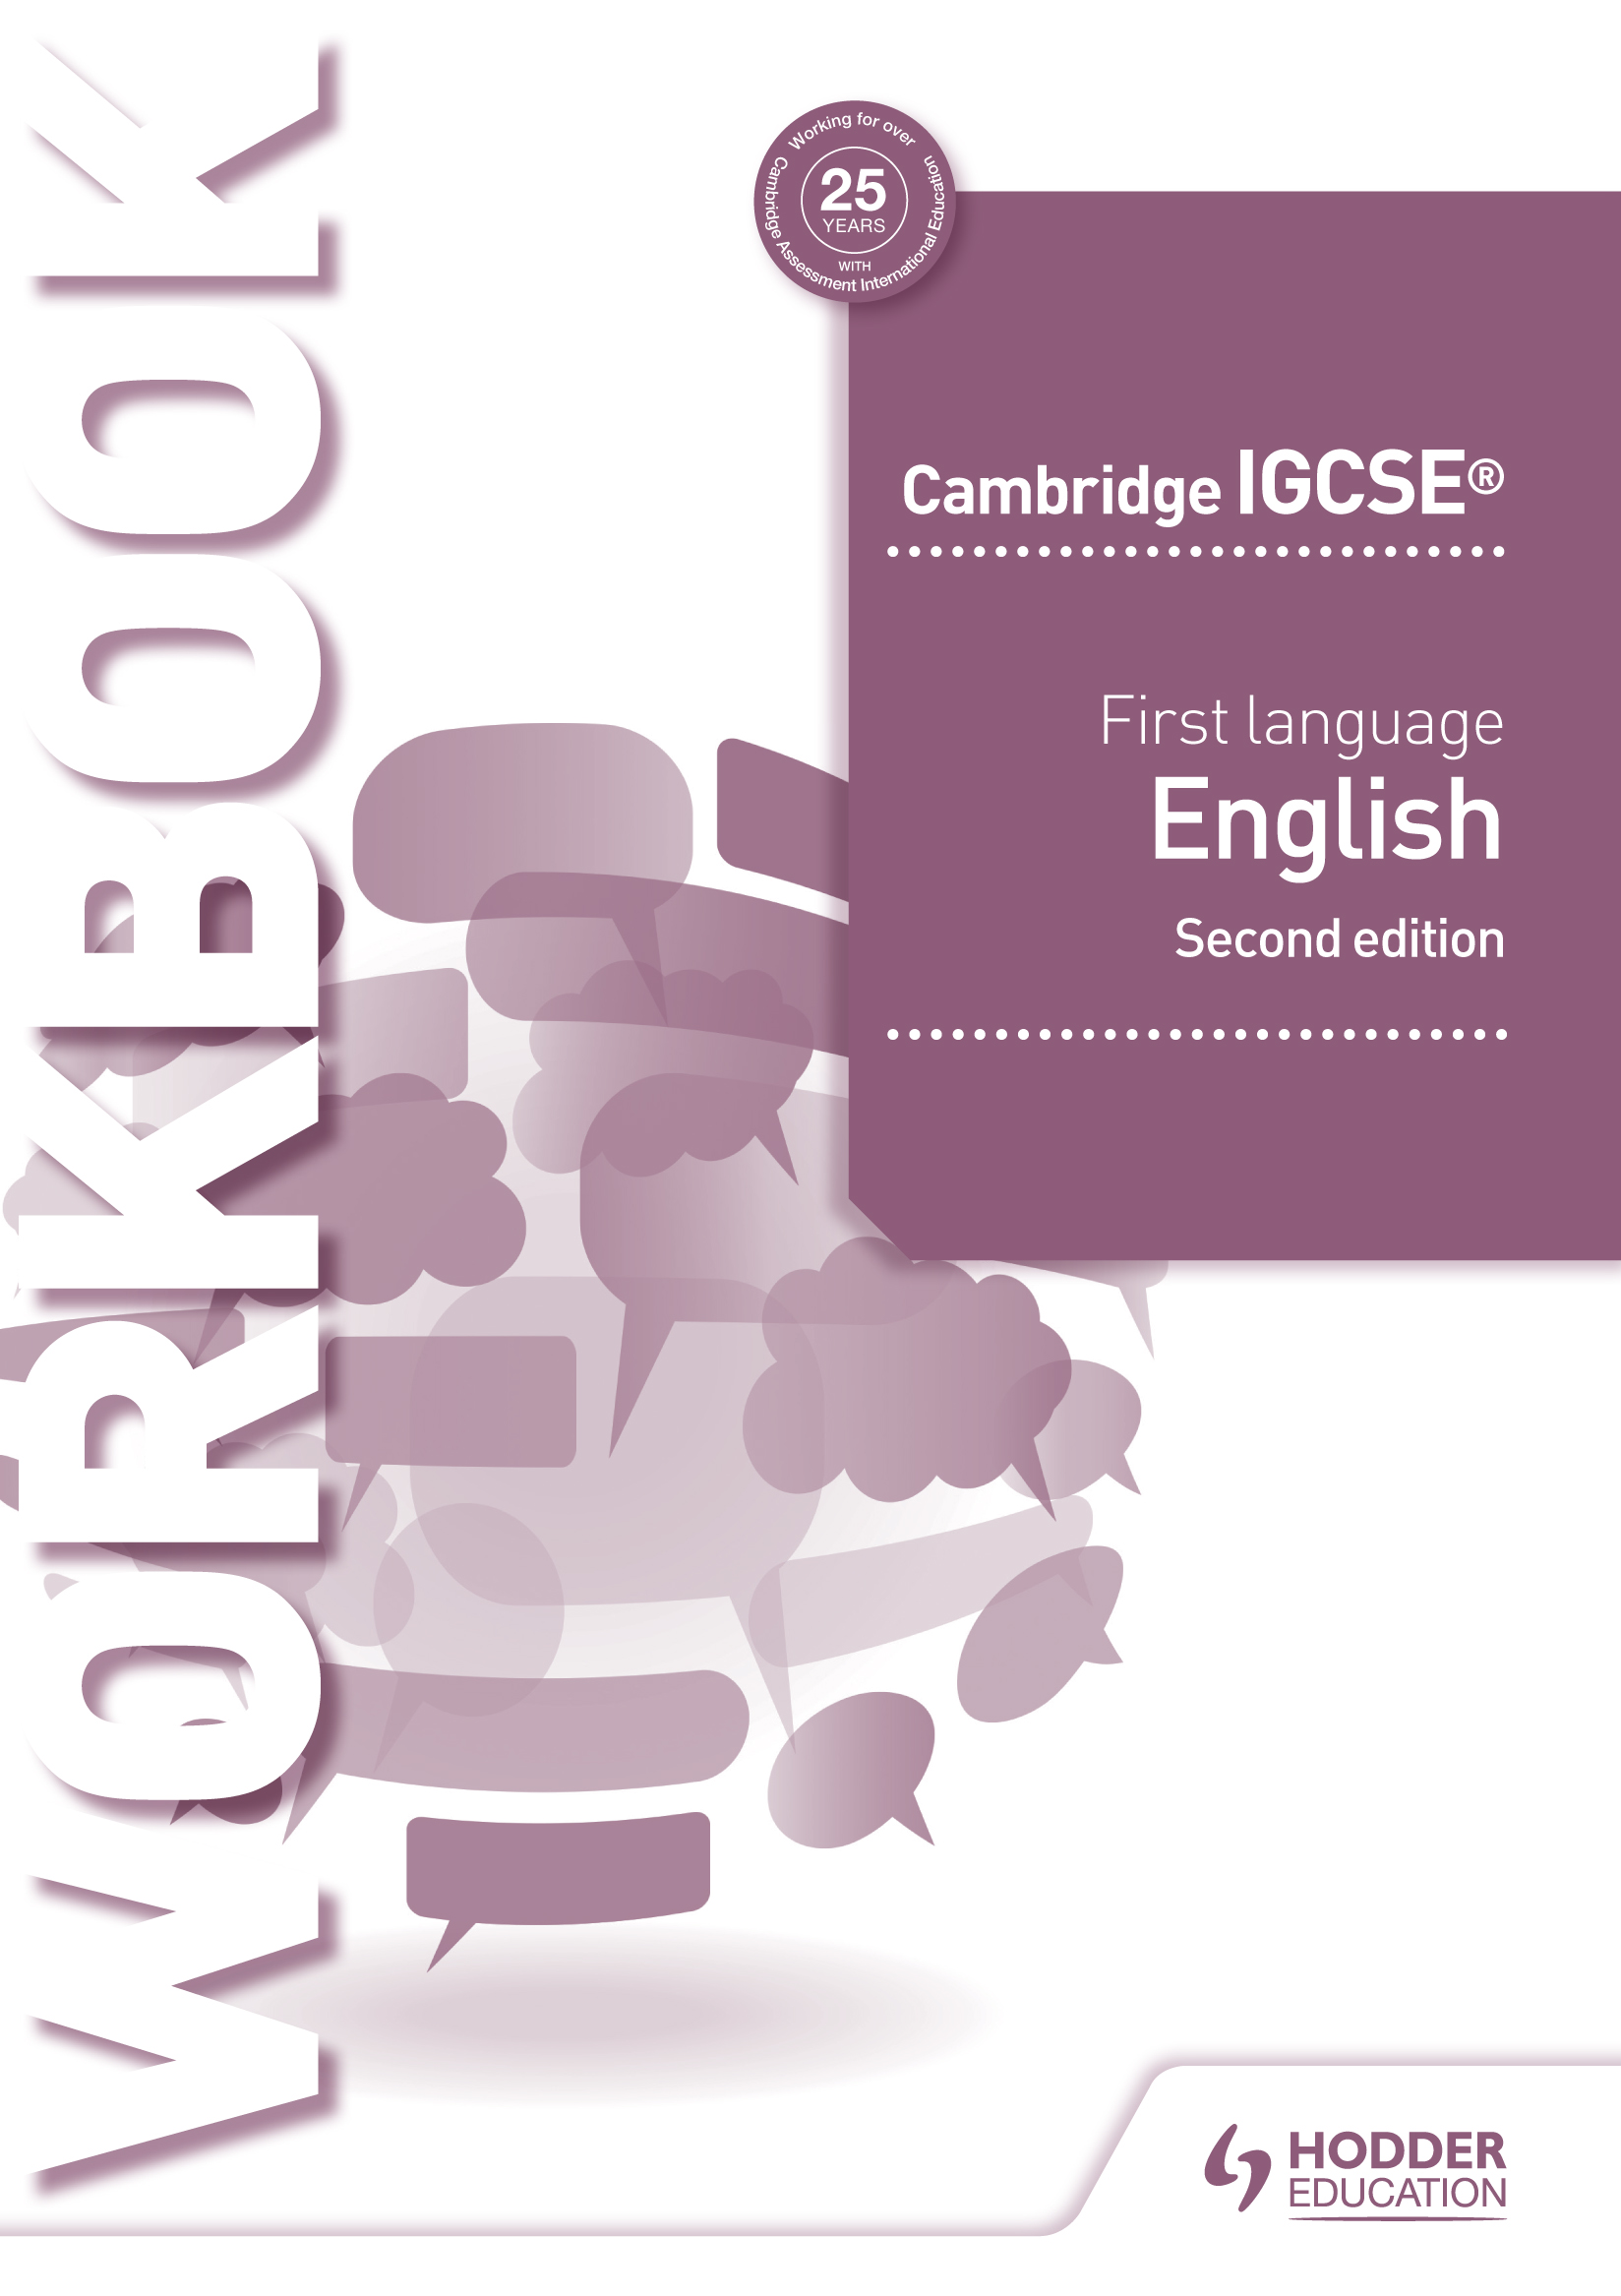 iGCSE Coursework Tracking